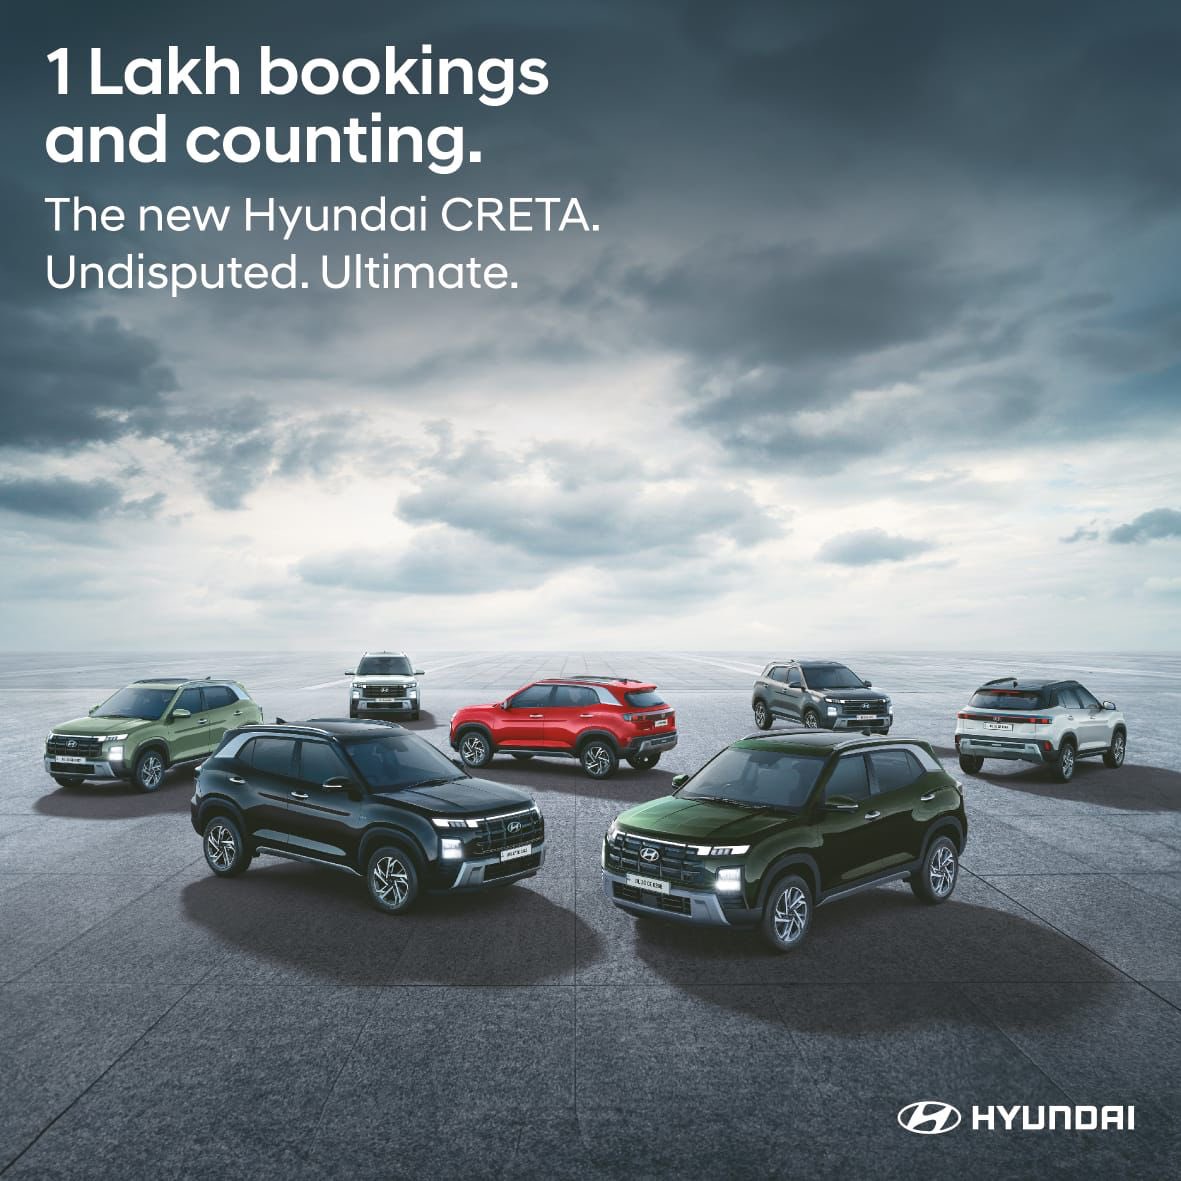 New Hyundai CRETA surpasses 1 lakh booking milestone @HyundaiIndia